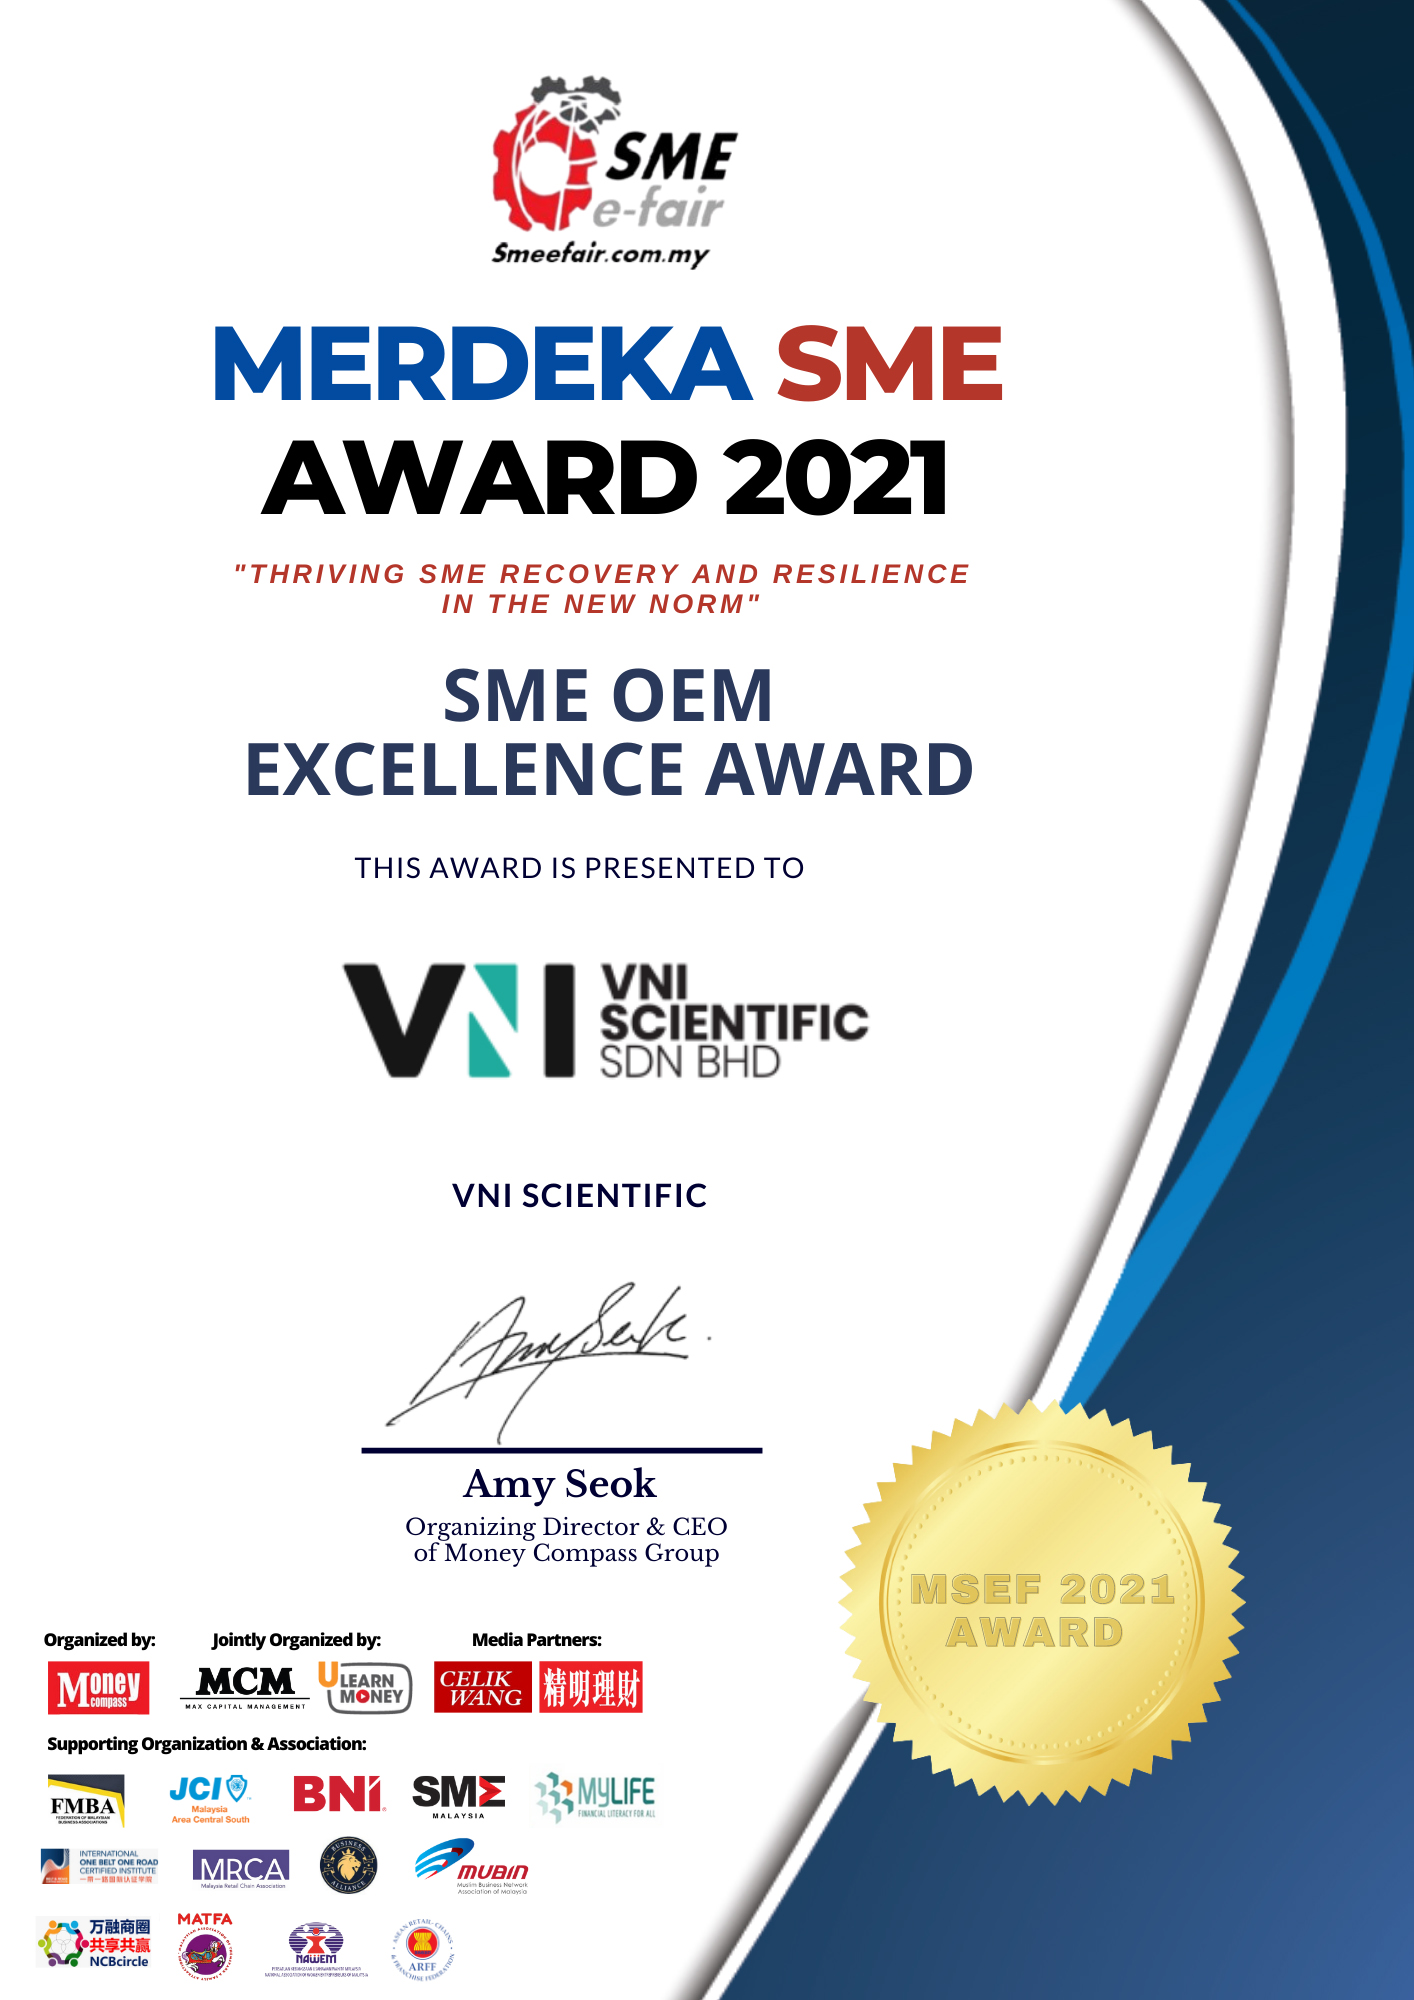 MERDEKA SME AWARD 2021 (SME OEM EXCELLENCE AWARD)